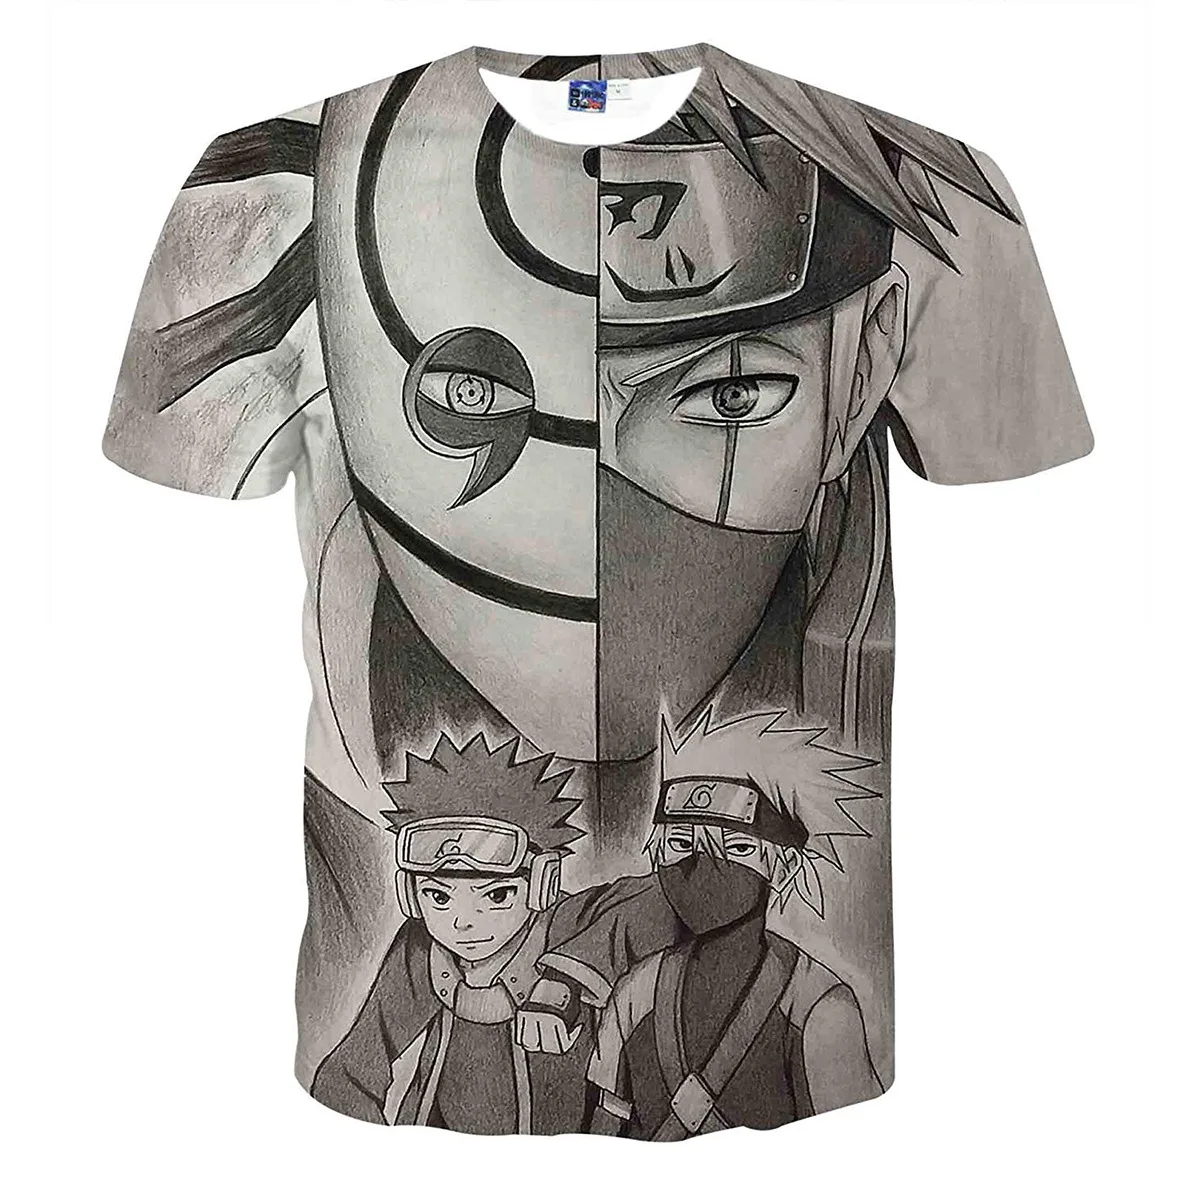 

New Japanese Manga Narutoes T-shirt 3d Printing Men's and Women's T-shirts Novelty Casual Boy tshirt Summer T Shirt For Kid Tops